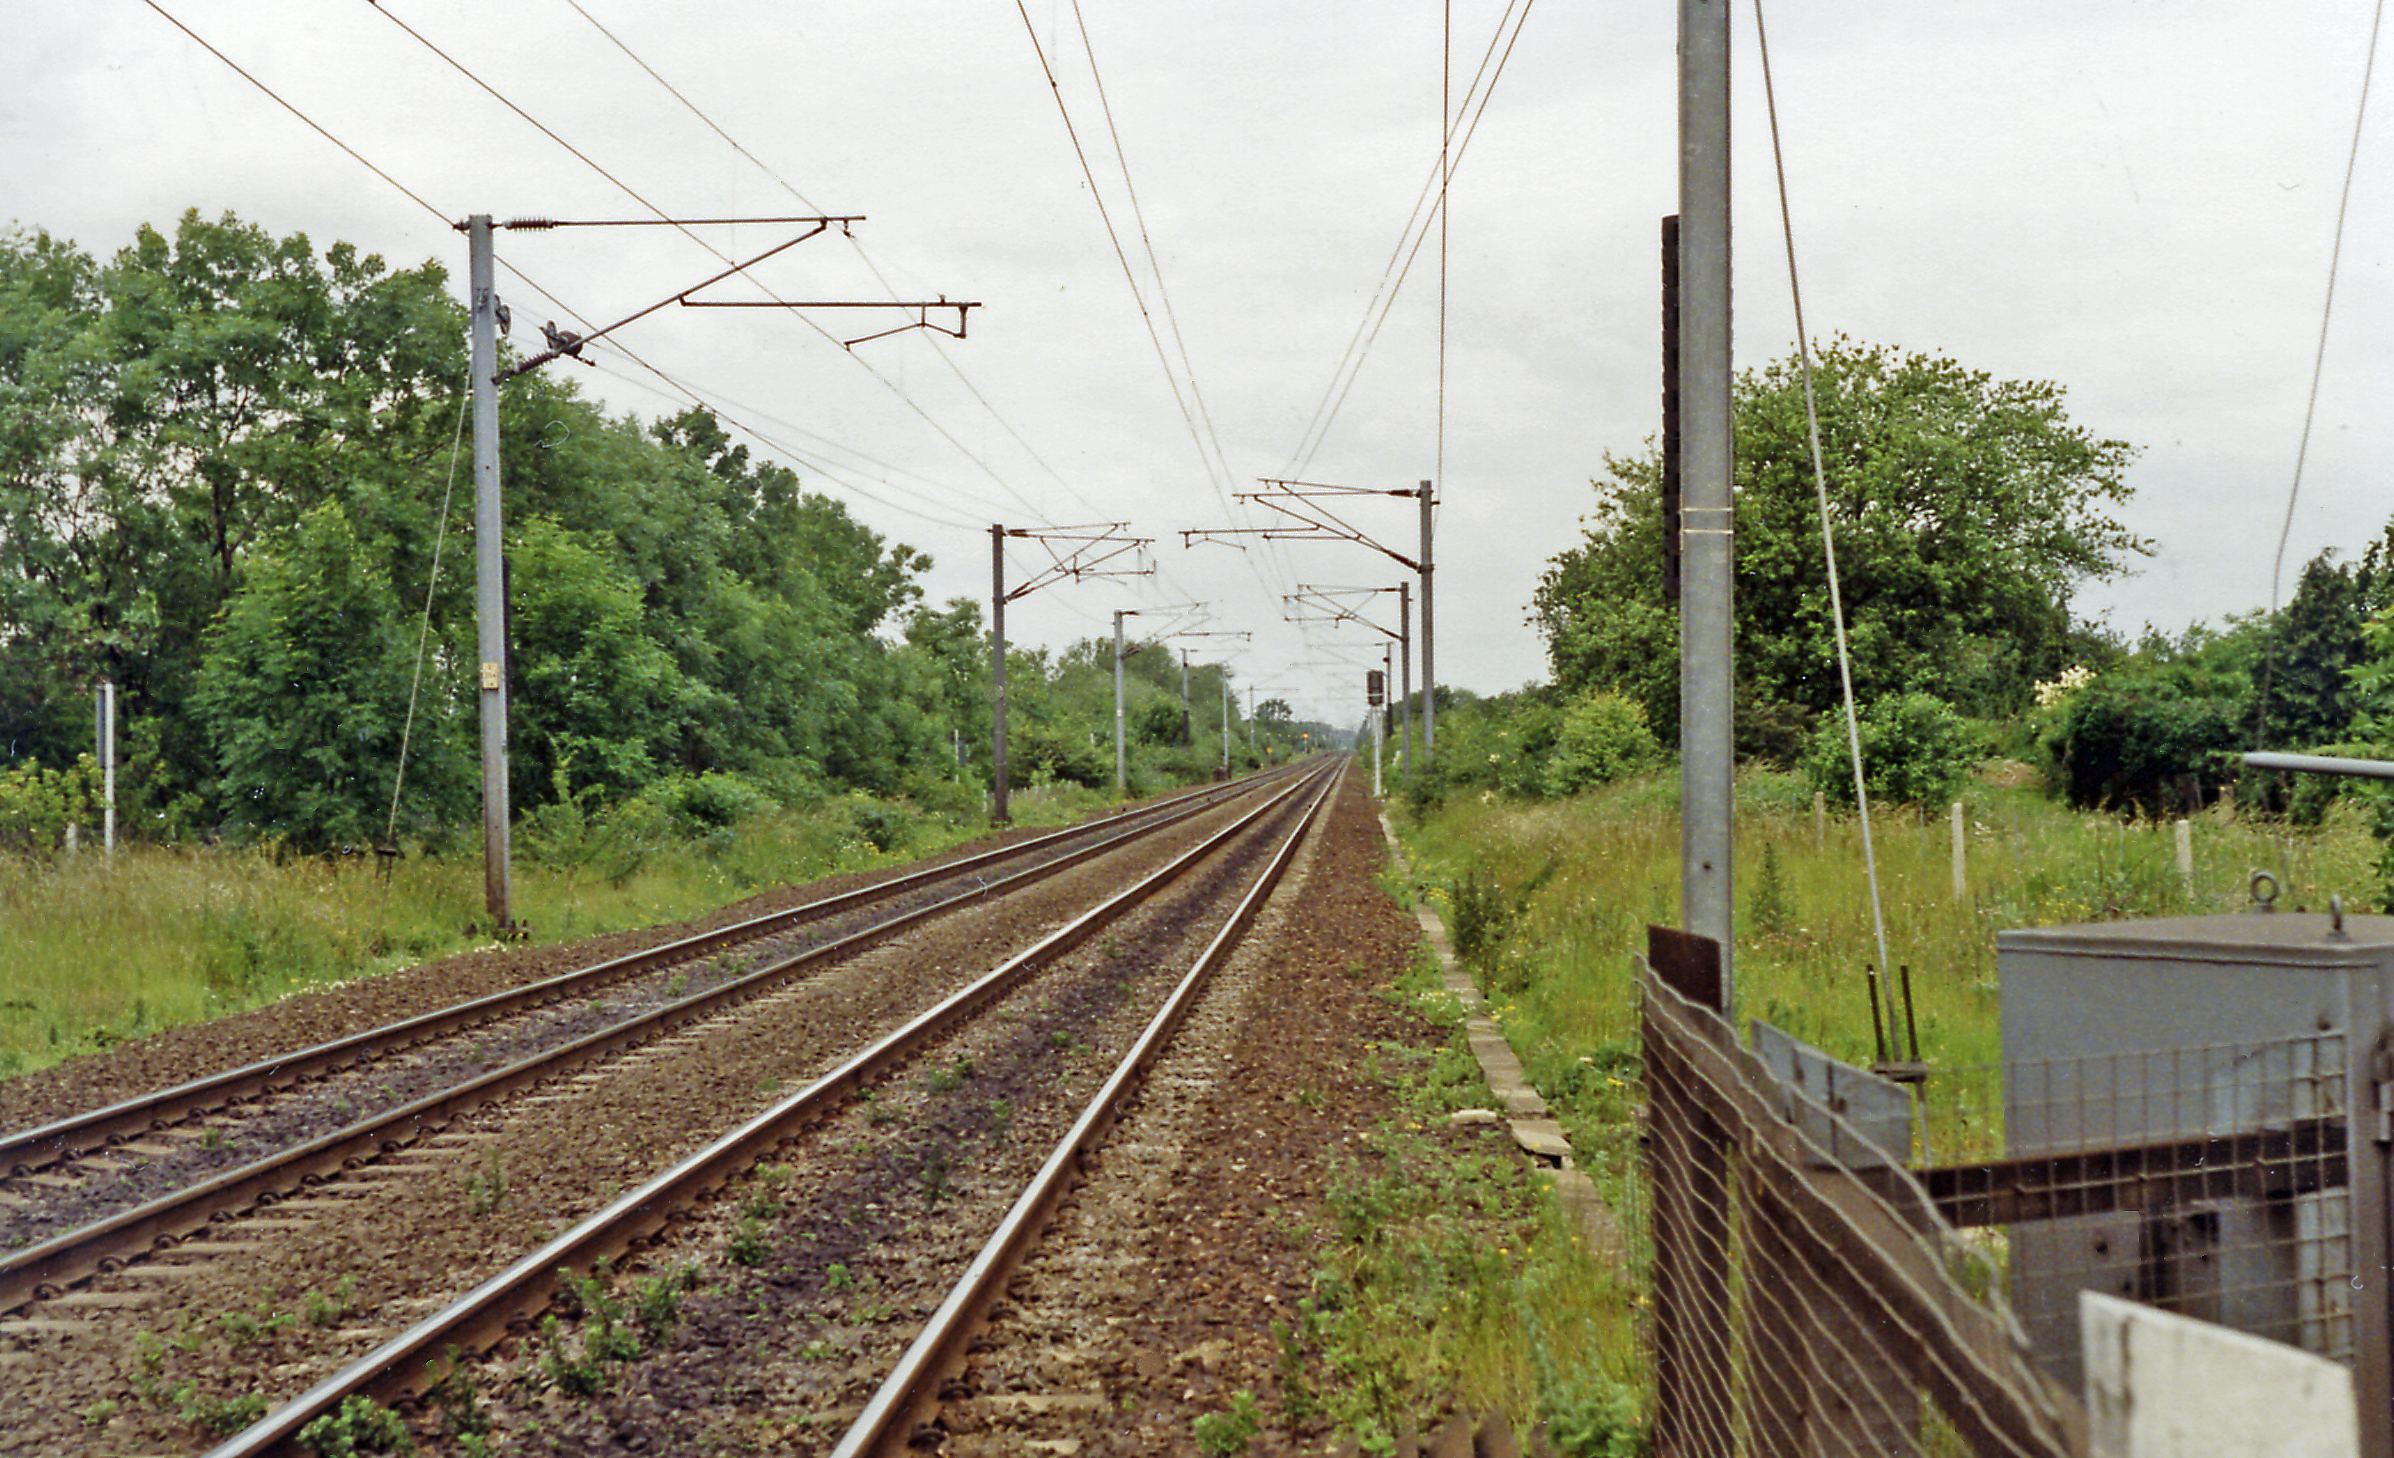 Arksey railway station